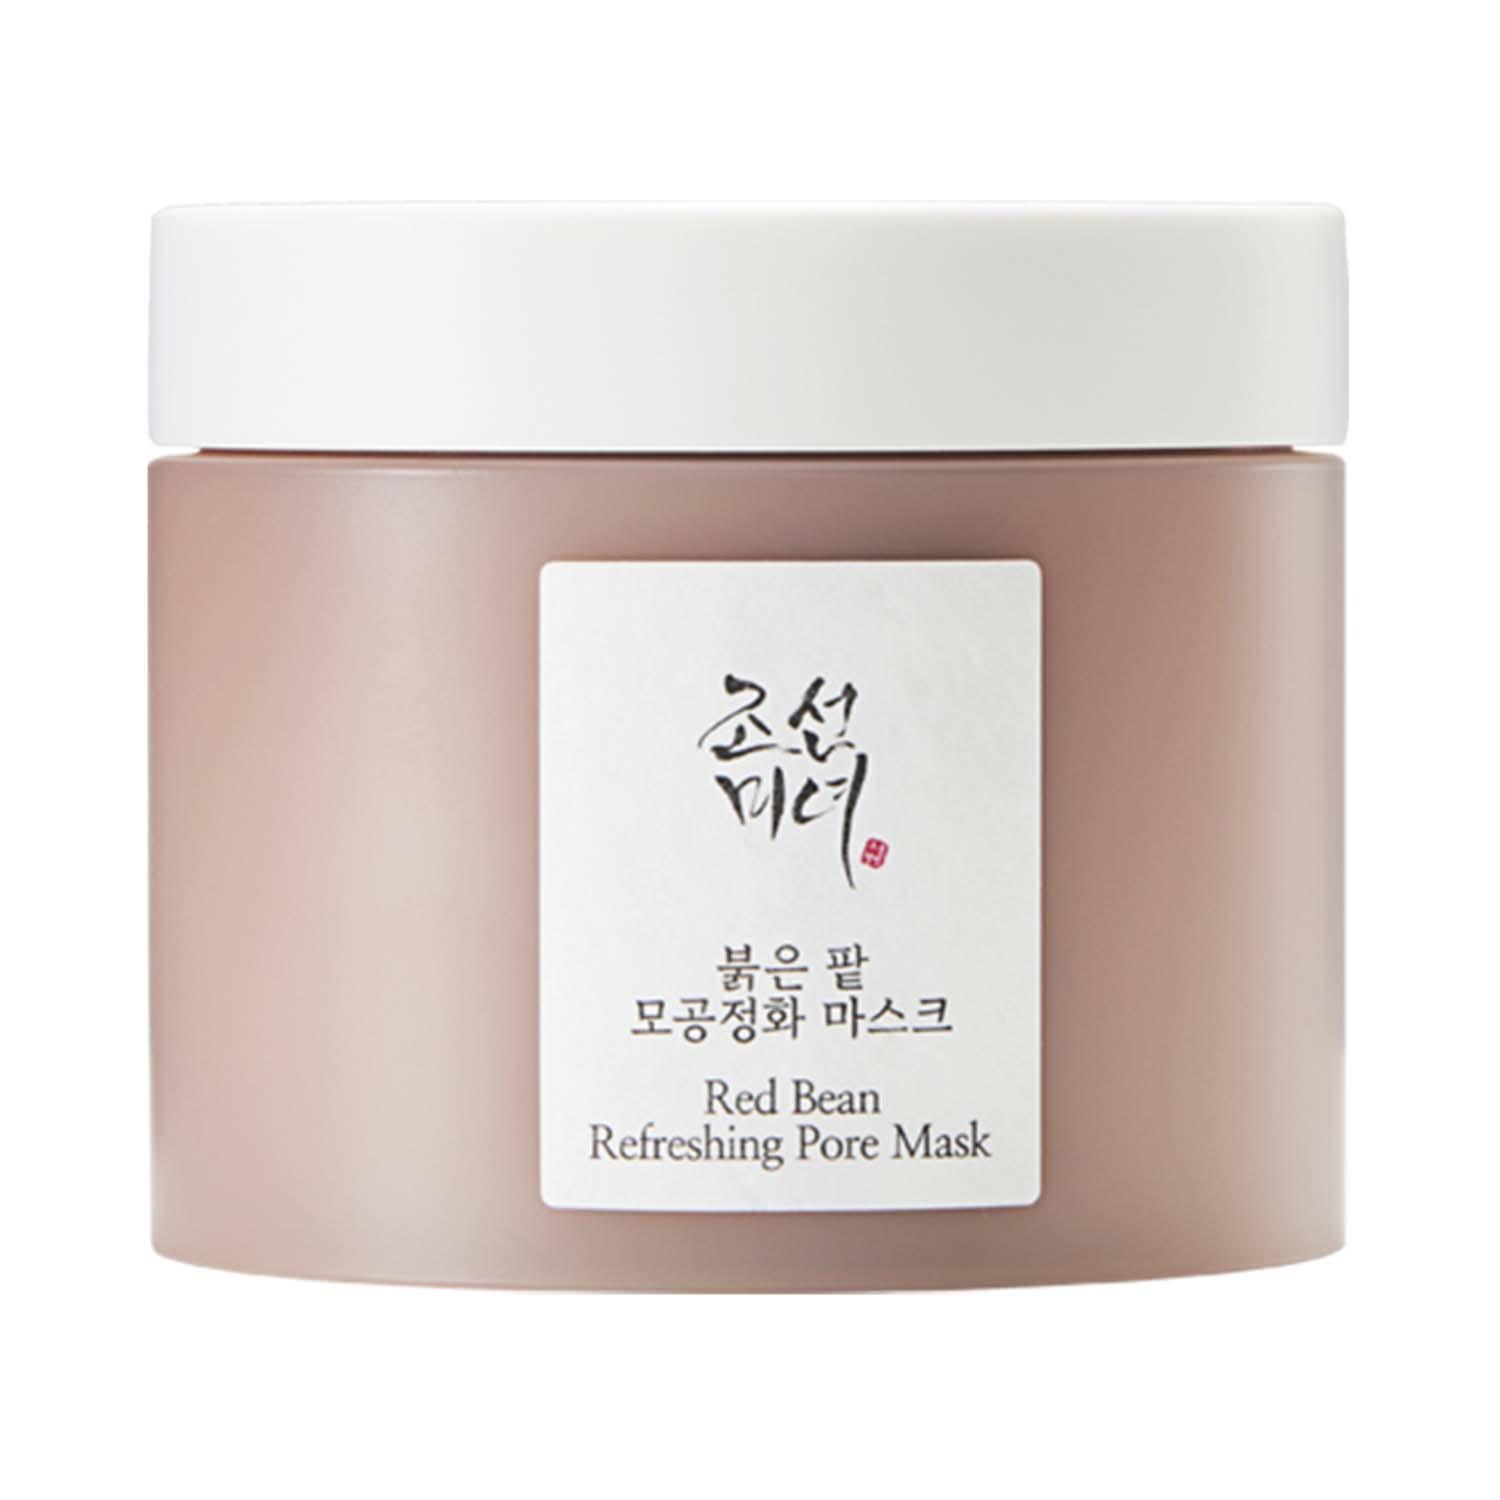 Beauty of Joseon Red Bean Refreshing Pore Mask (140 ml)